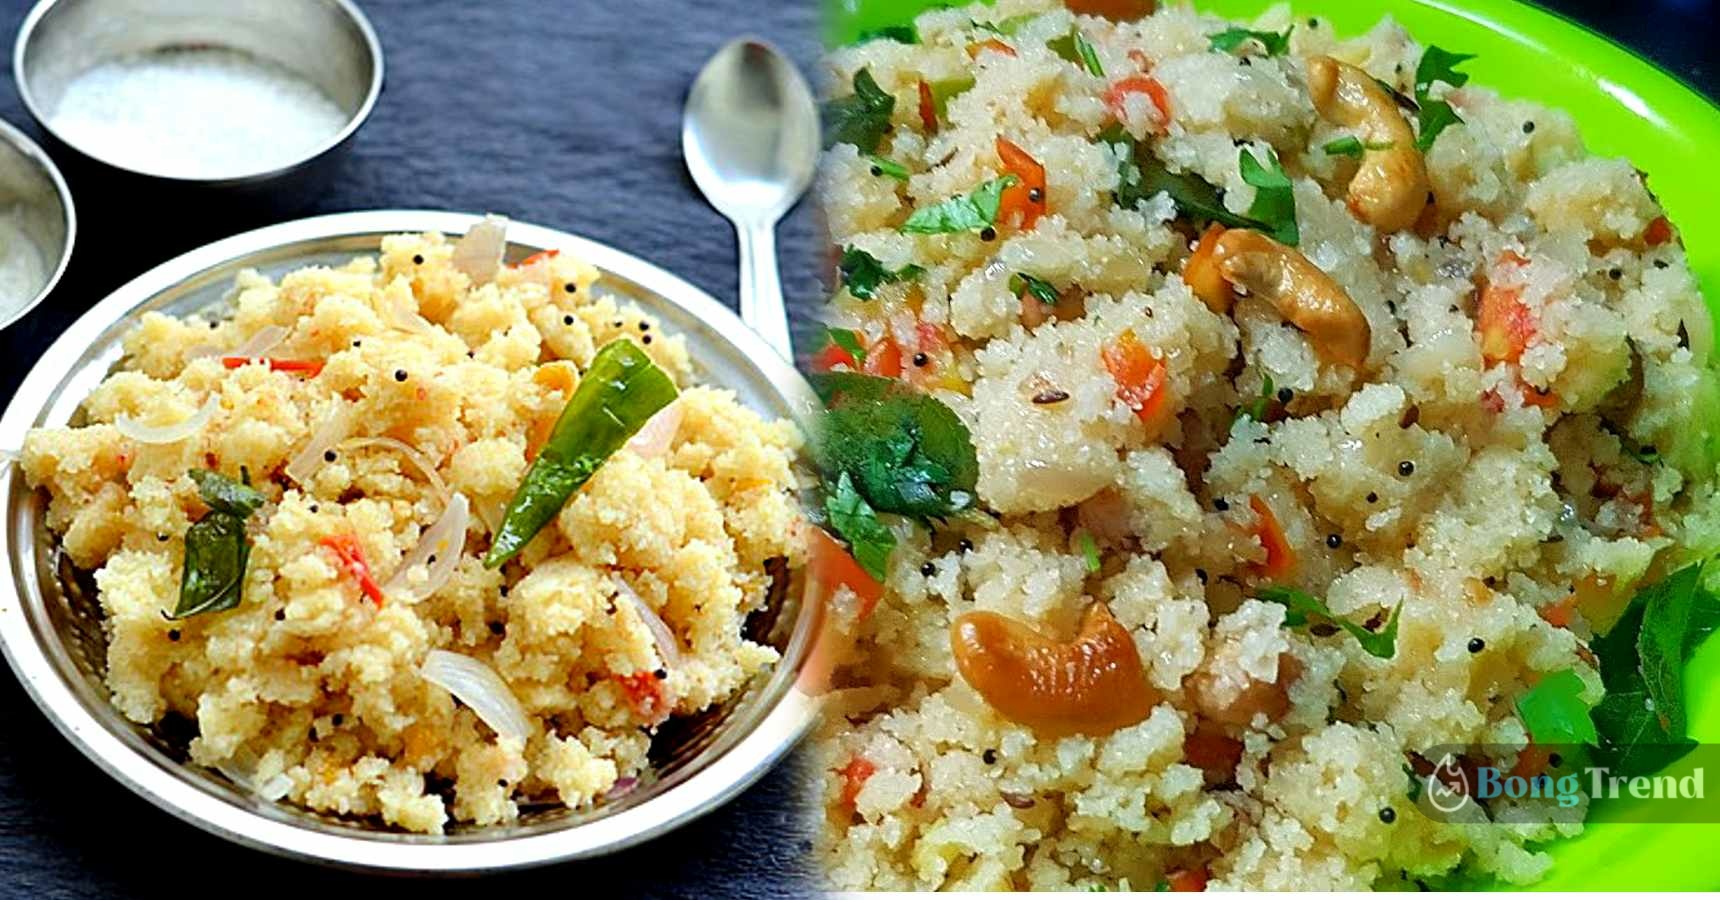 Sujir Upma Recipe,Suji,Upma,সুজির উপমা রেসিপি,রান্নাবান্না,সকালের জলখাবার,সুজির উপমা তৈরির রেসিপি,জলখাবার,Healthy Breakfast,Recipe